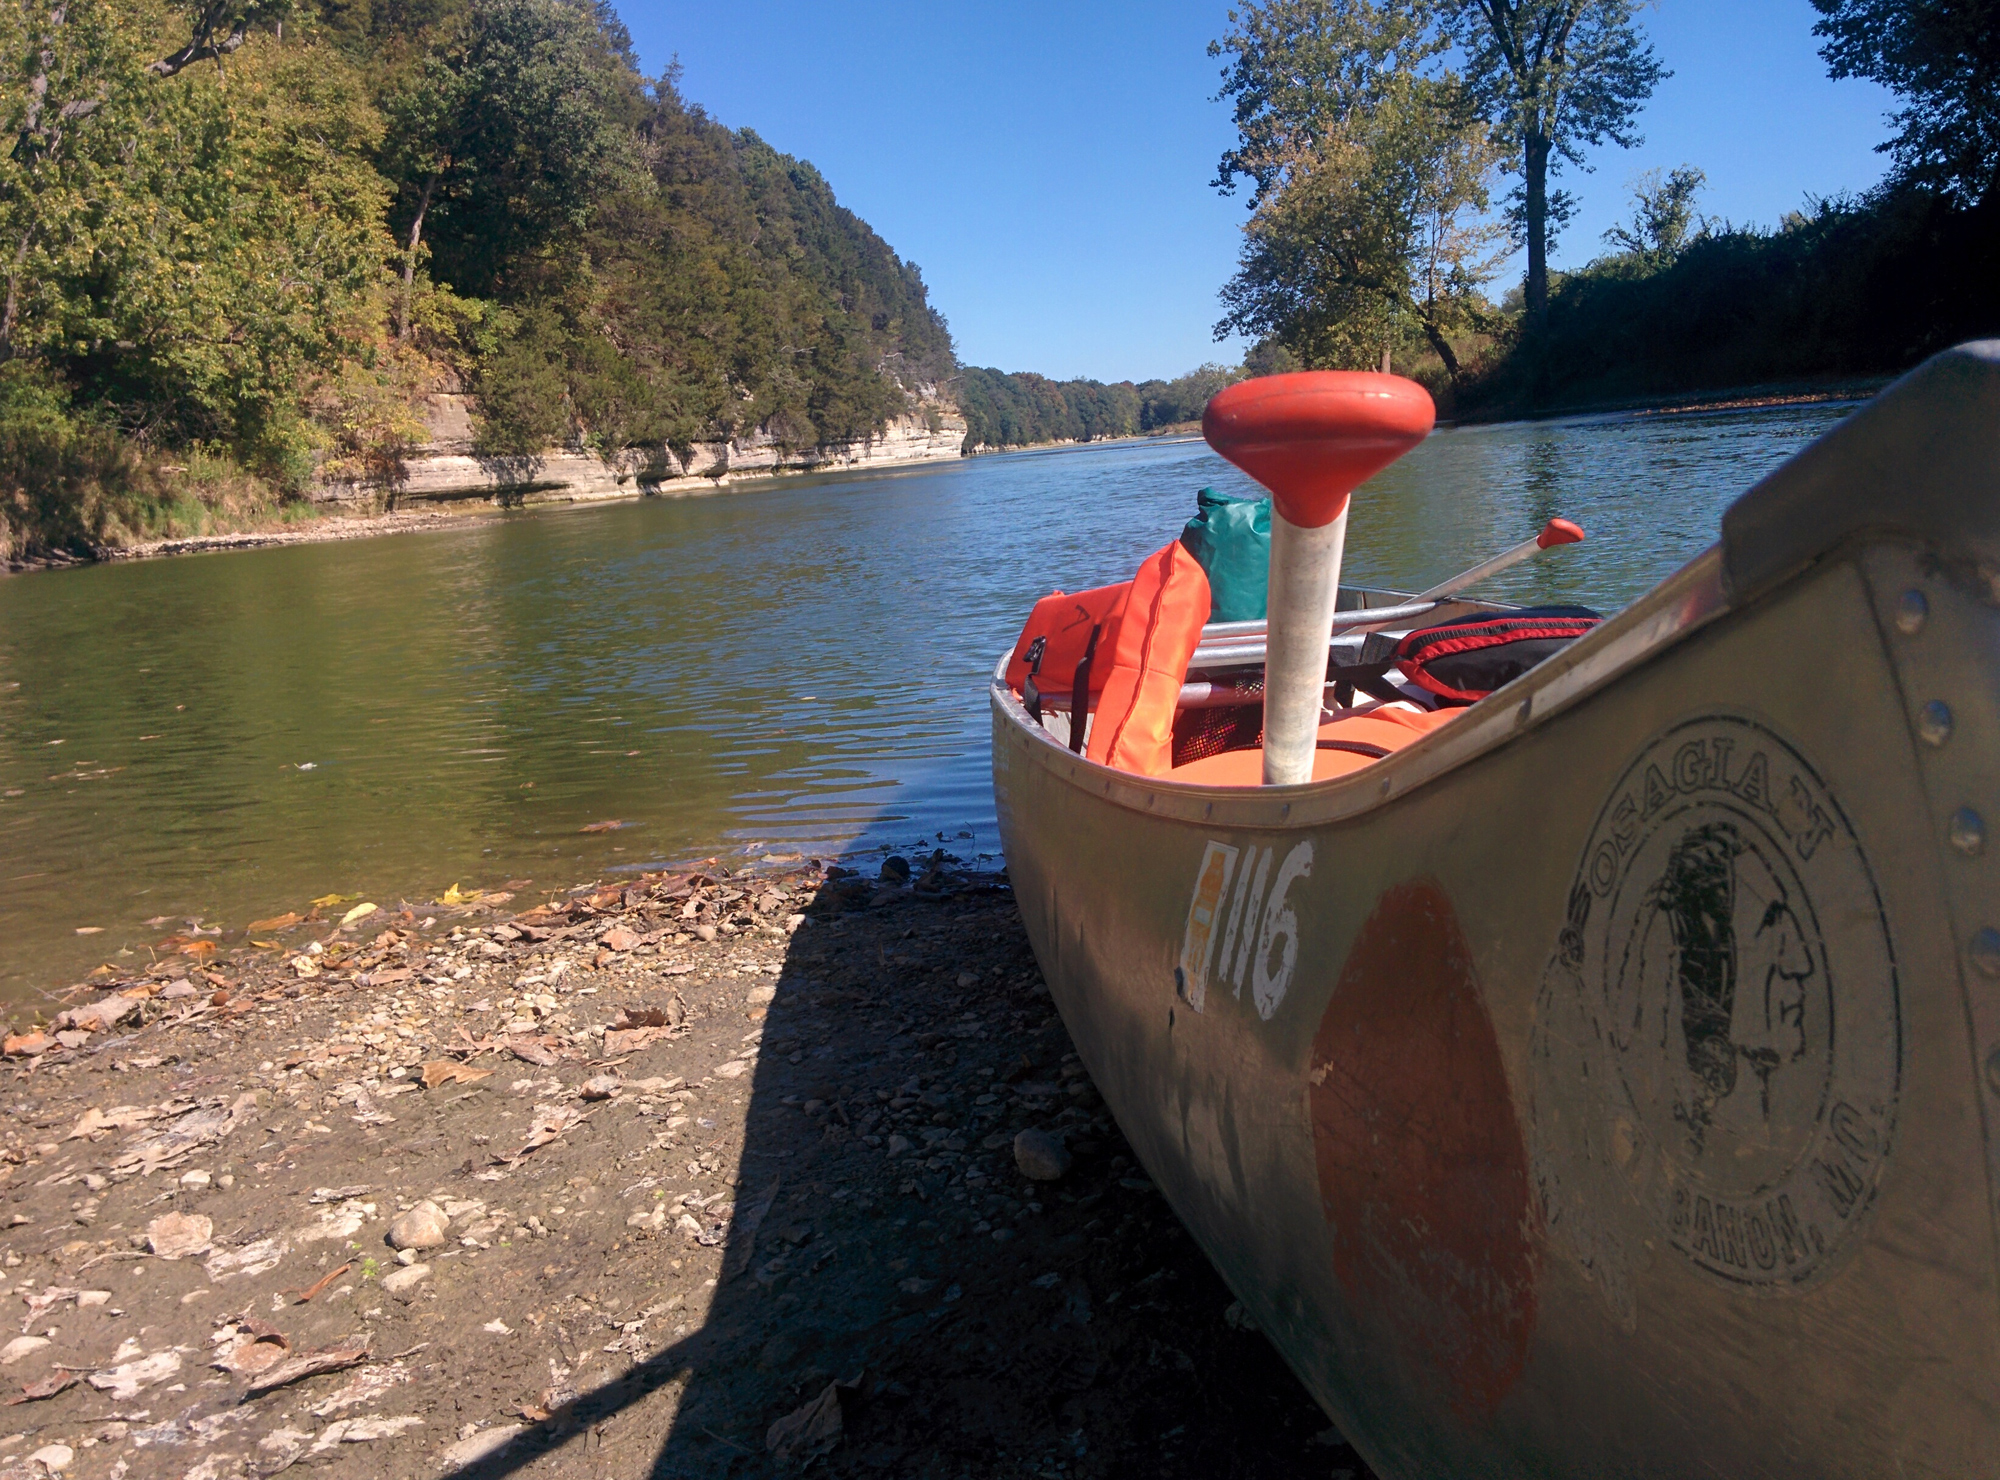 Canoe Trip